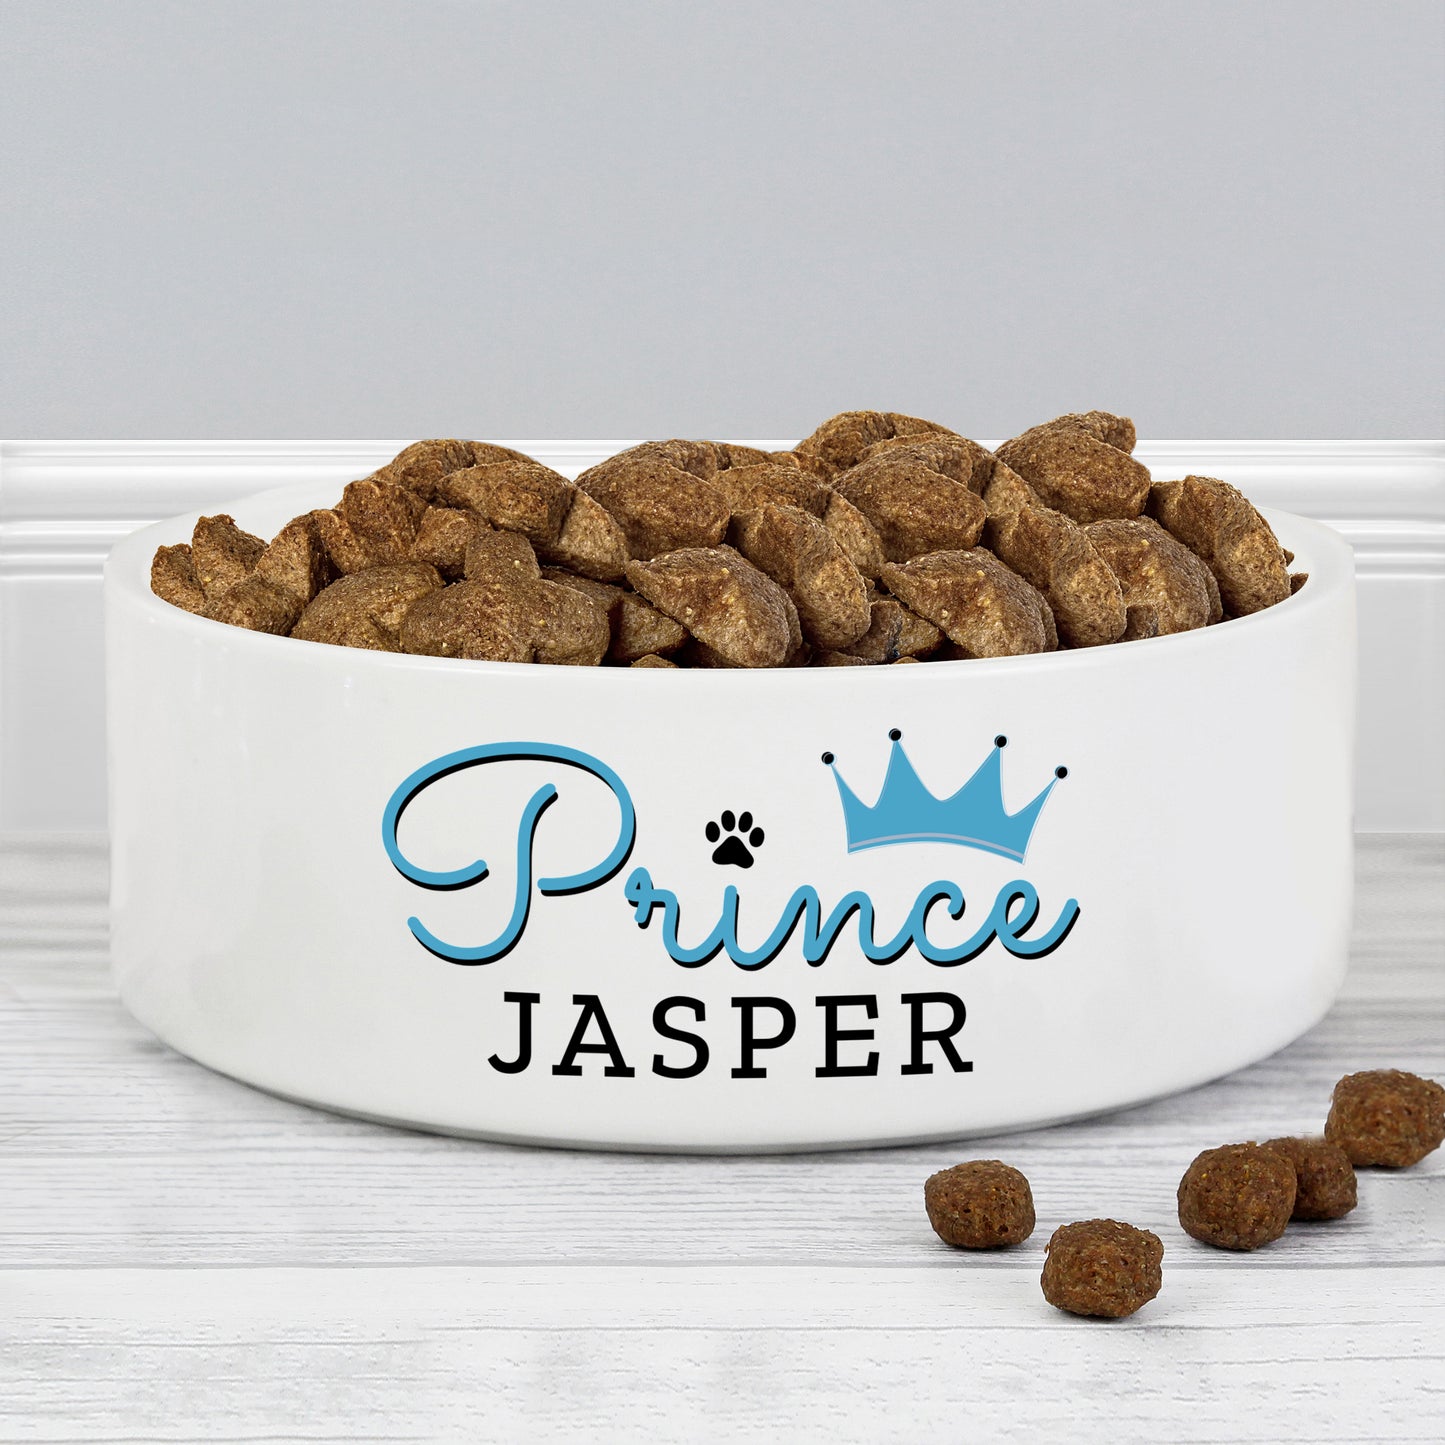 Personalised Prince Pet Bowl